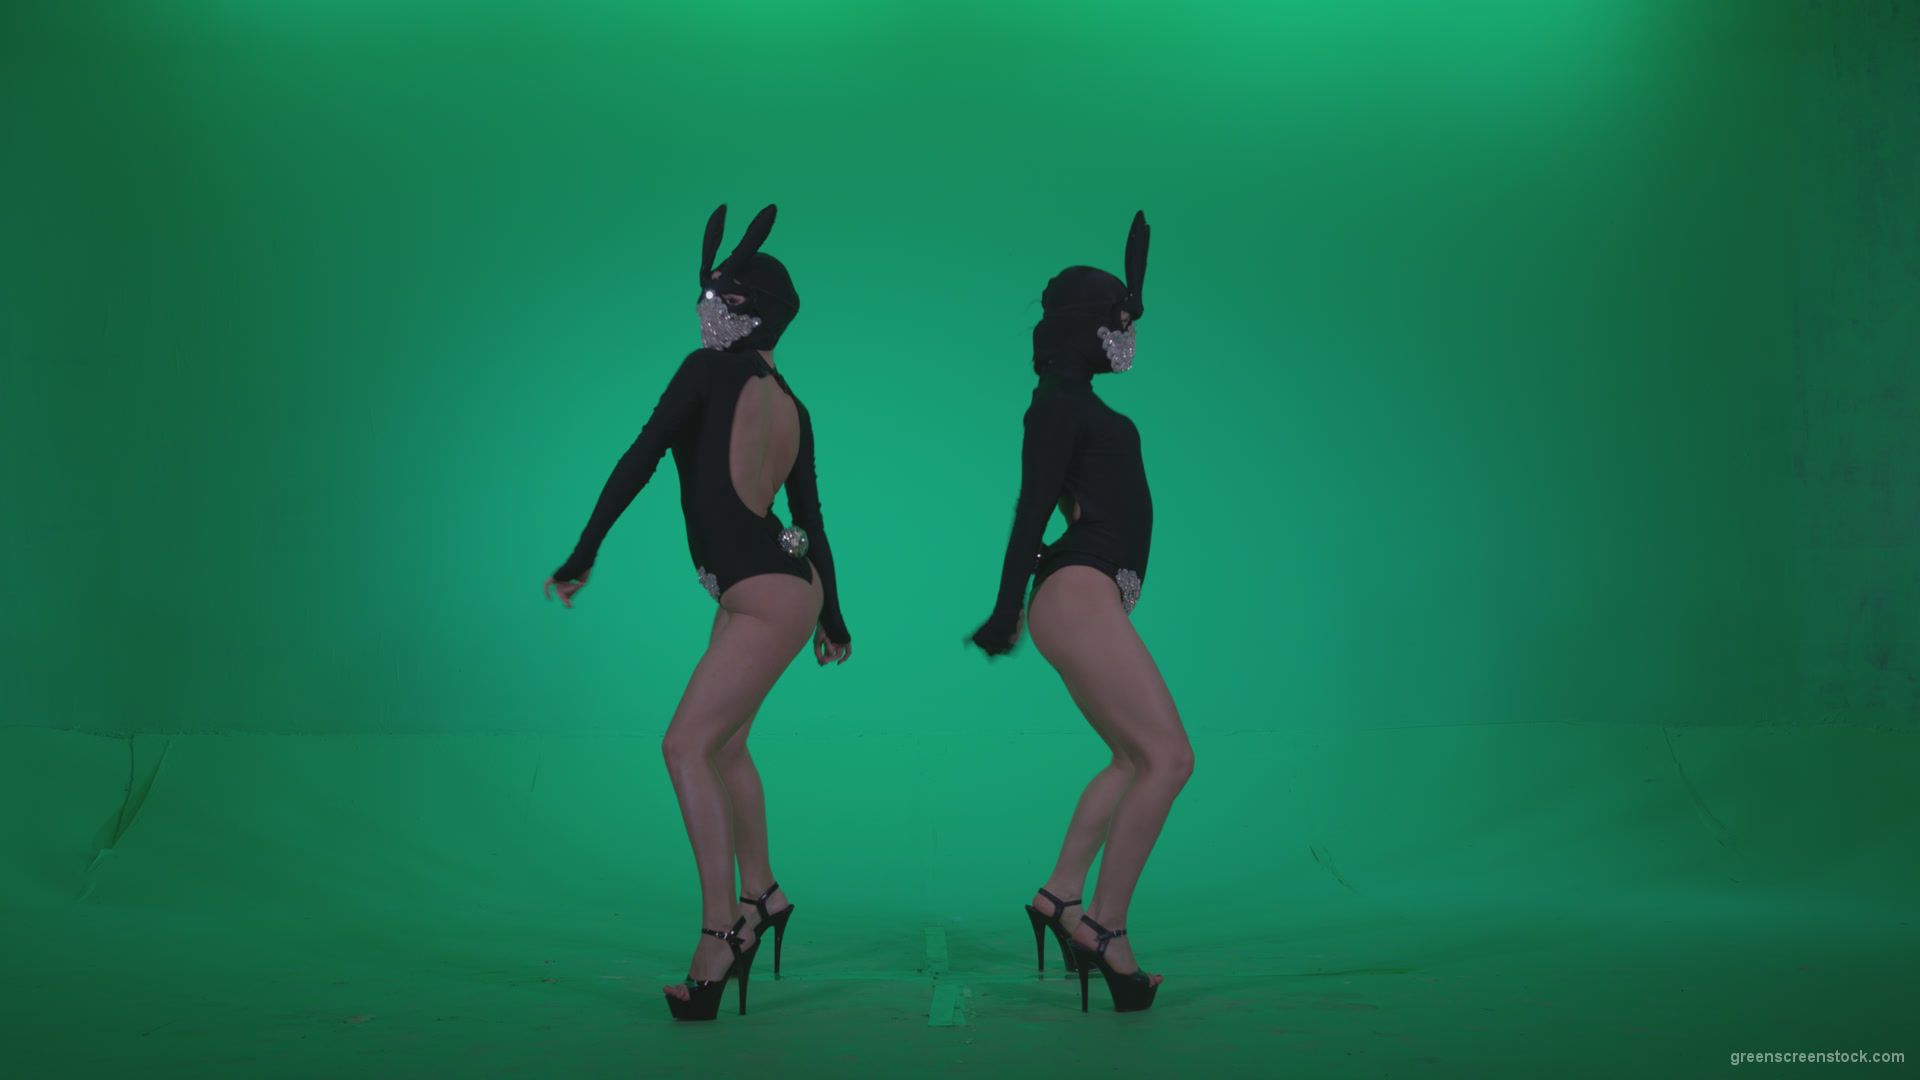 Go-go-Dancer-Black-Rabbit-u1-Green-Screen-Video-Footage_008 Green Screen Stock